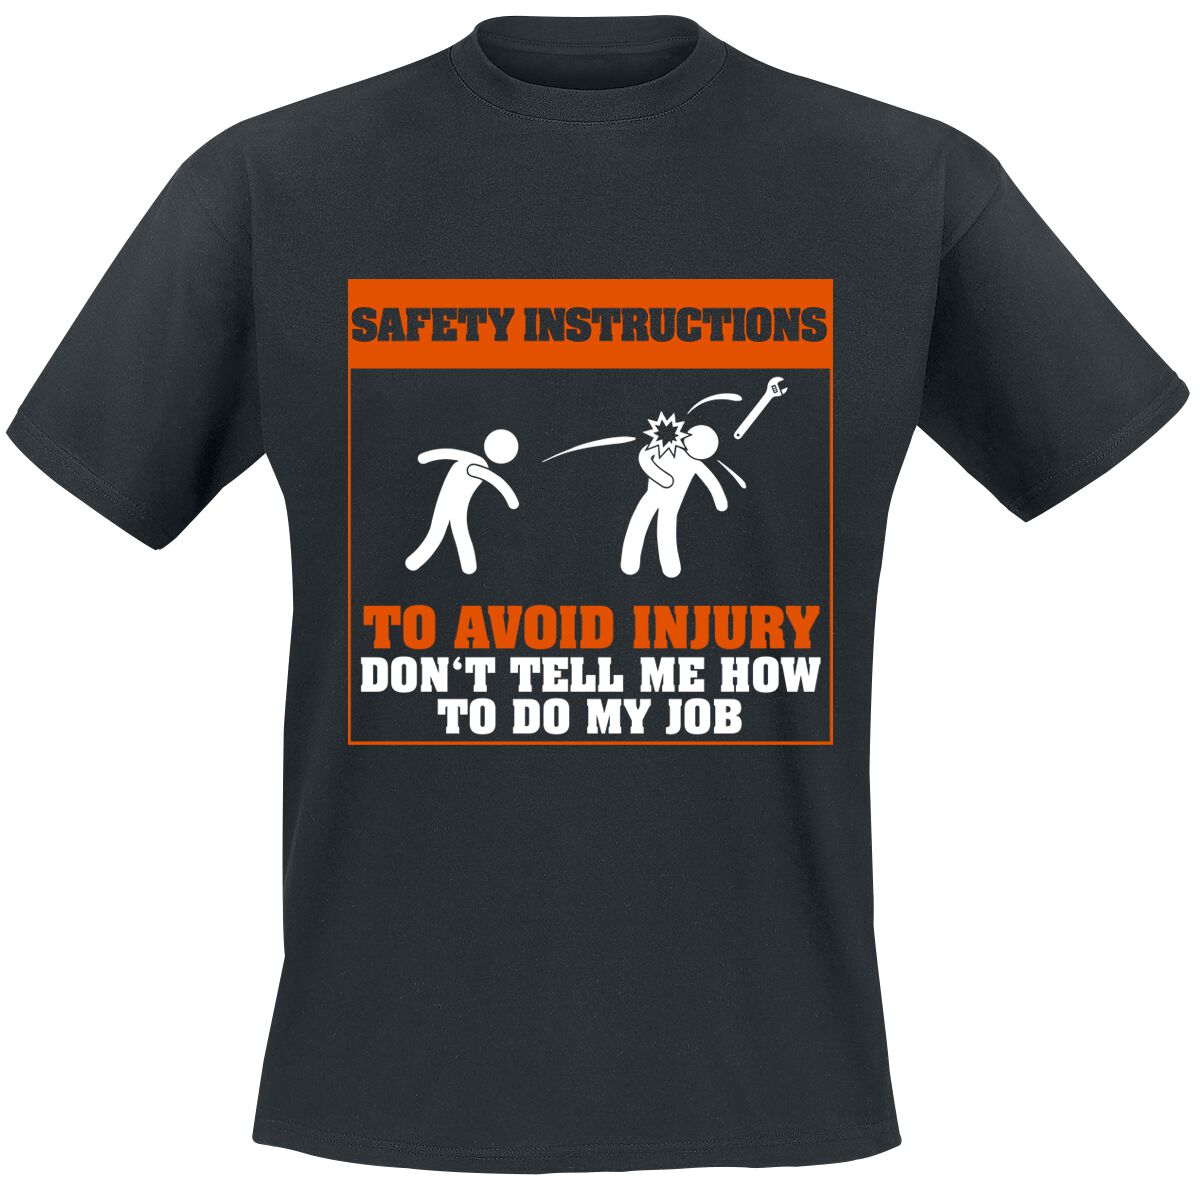 Work & Career Safety Instructions T-Shirt black